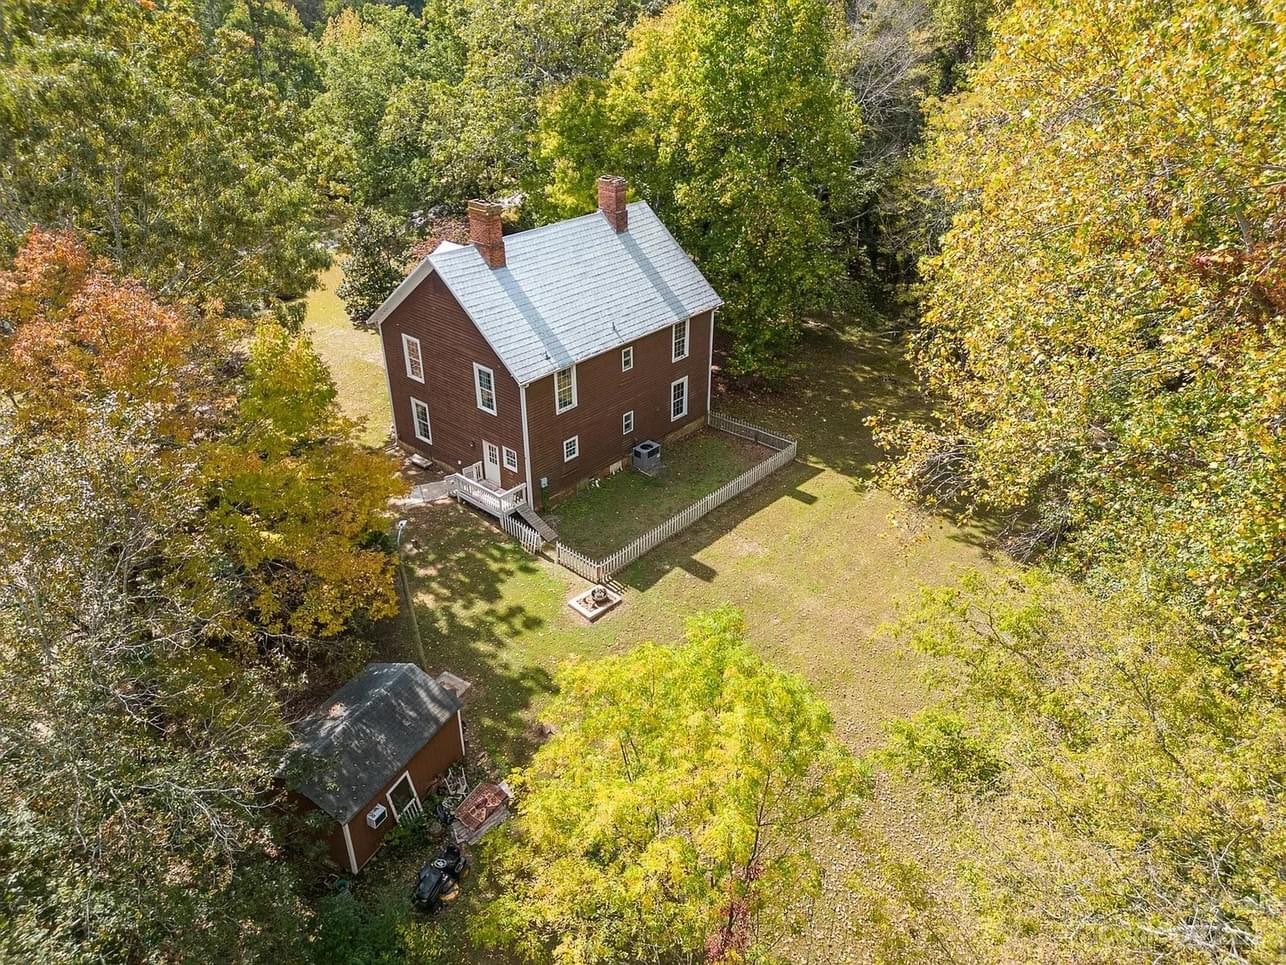 1862 Farmhouse For Sale In Chester South Carolina